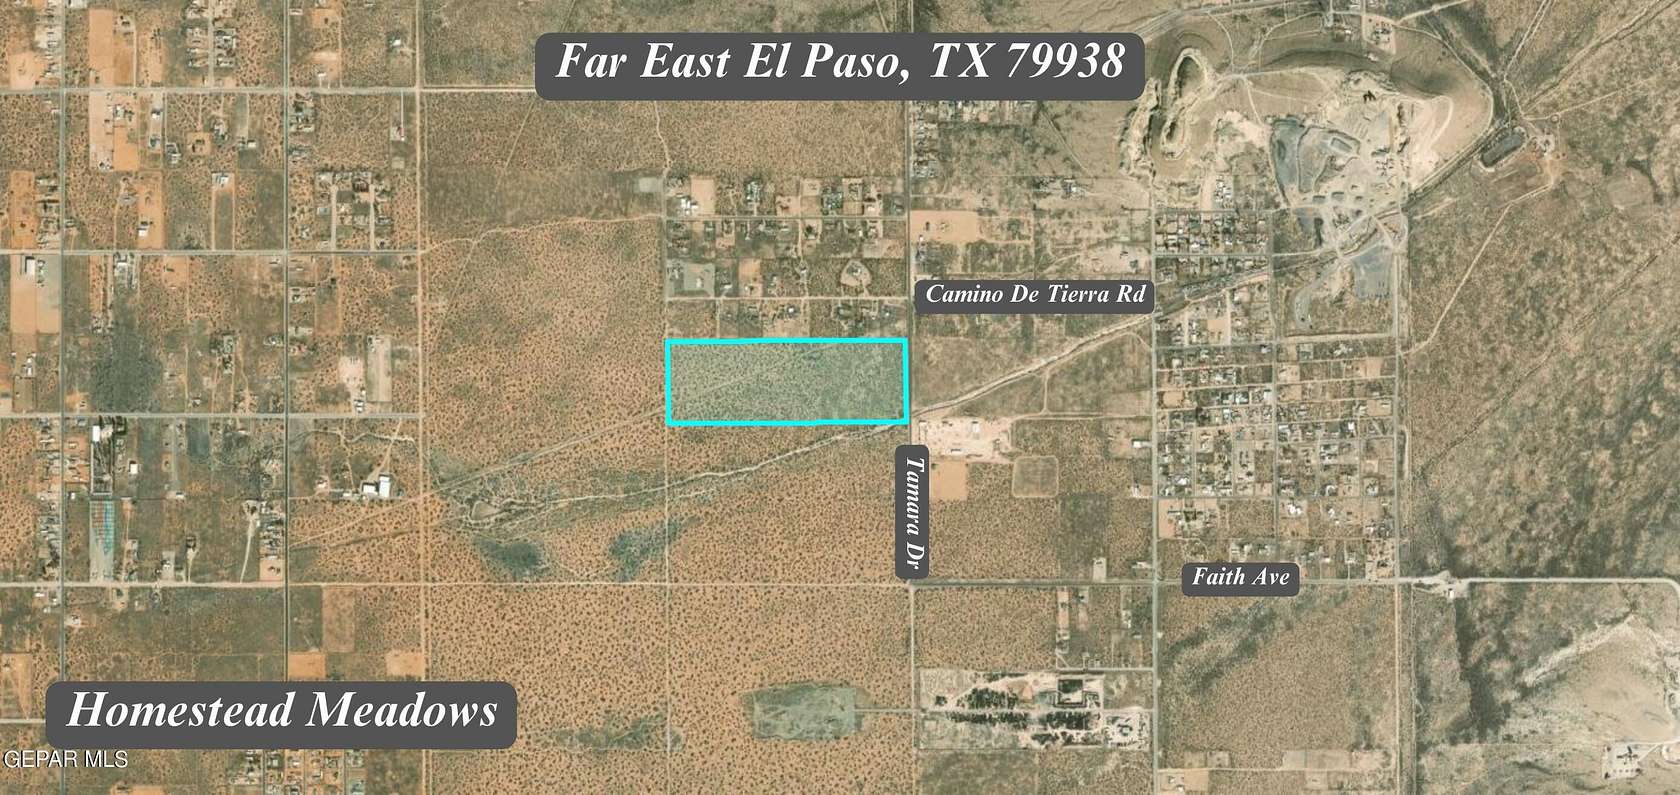 50.1 Acres of Land for Sale in El Paso, Texas